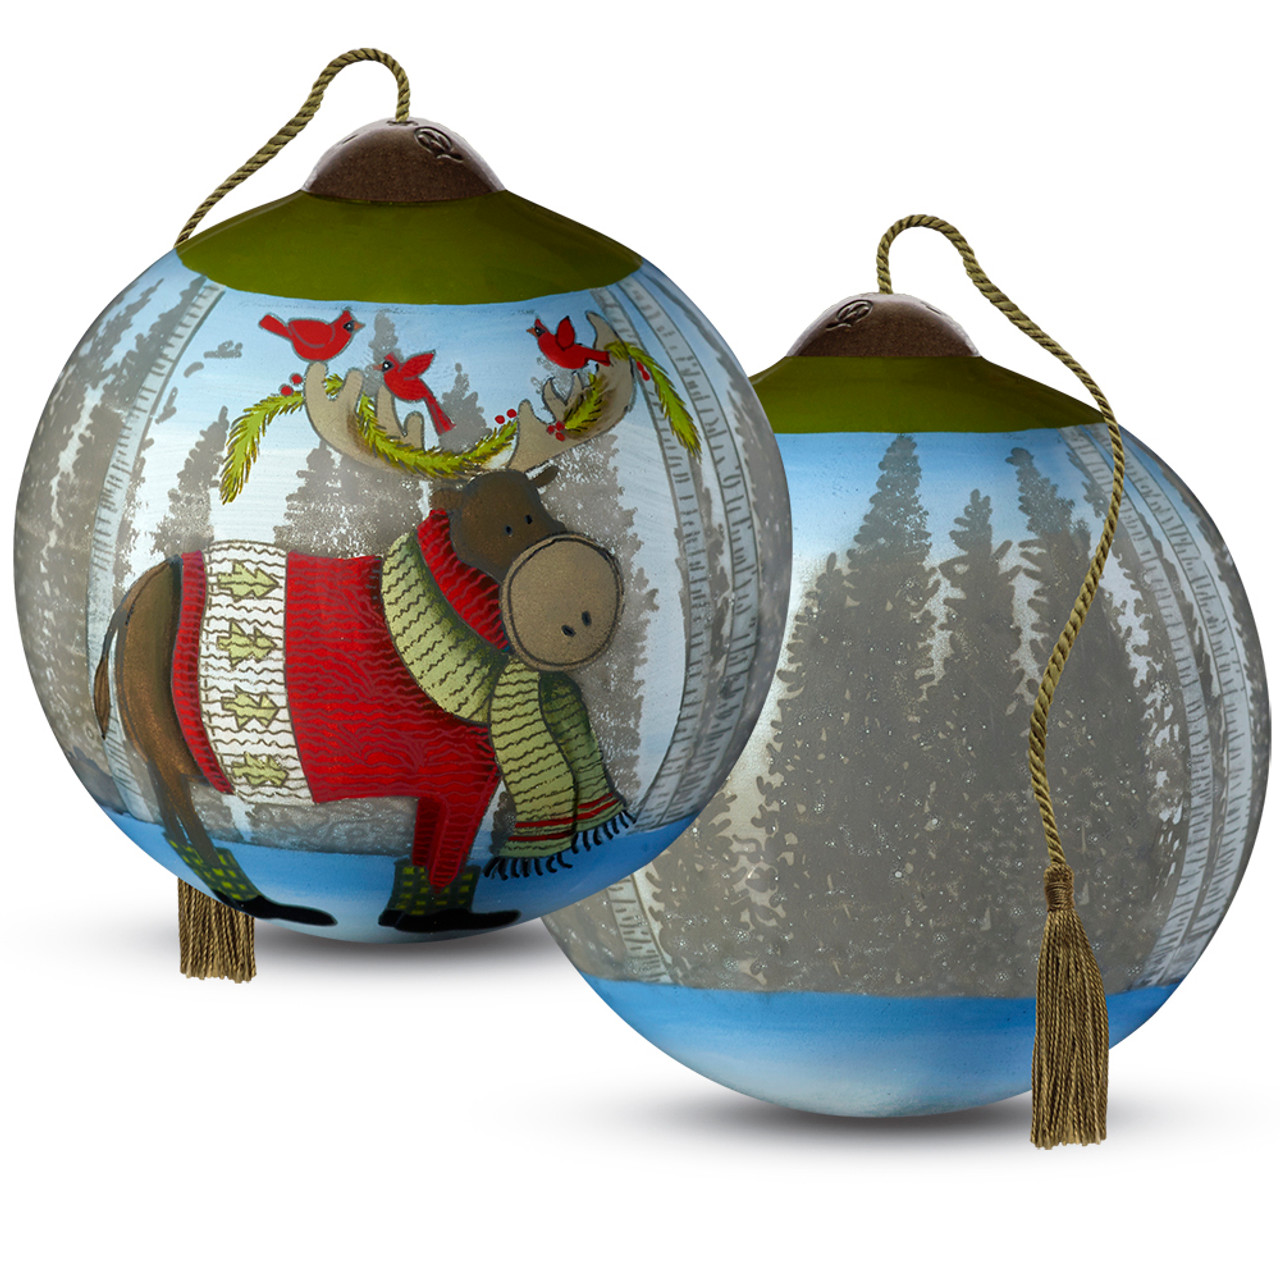 Forest Friends Mini Christmas Reindeer Mug + Reviews